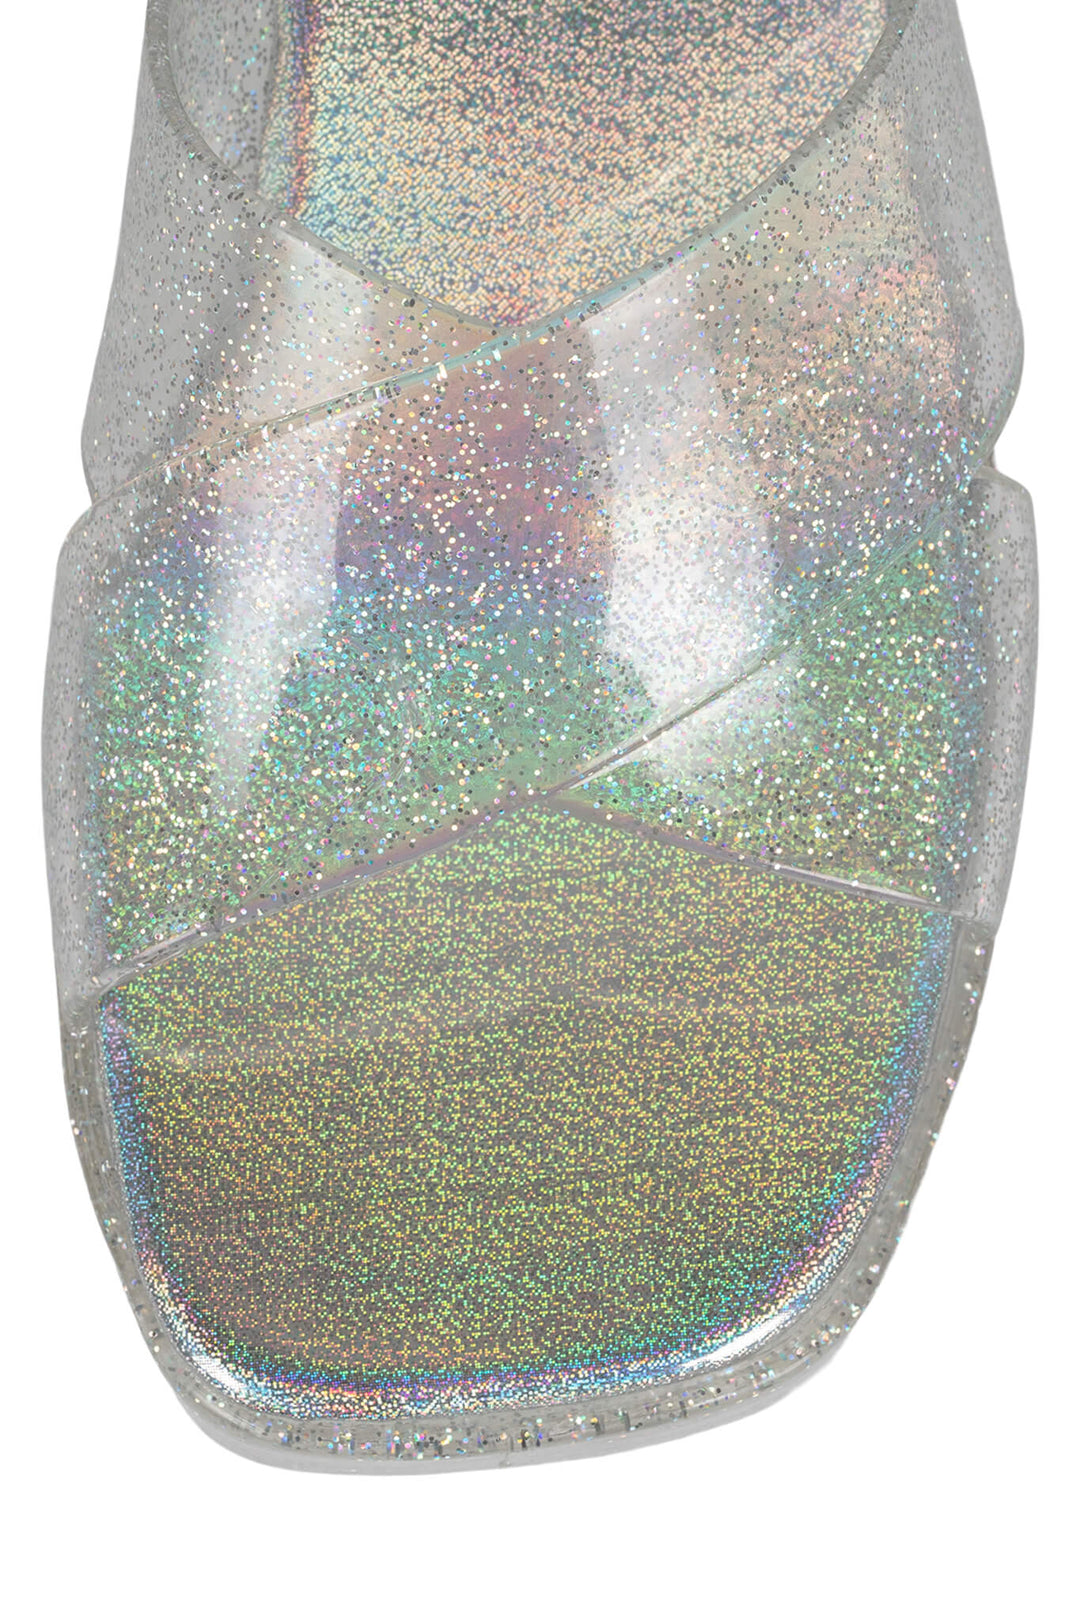 Jeffrey Campbell - Bubblegum Jelly Platform Slide in Silver Iridescent Glitter